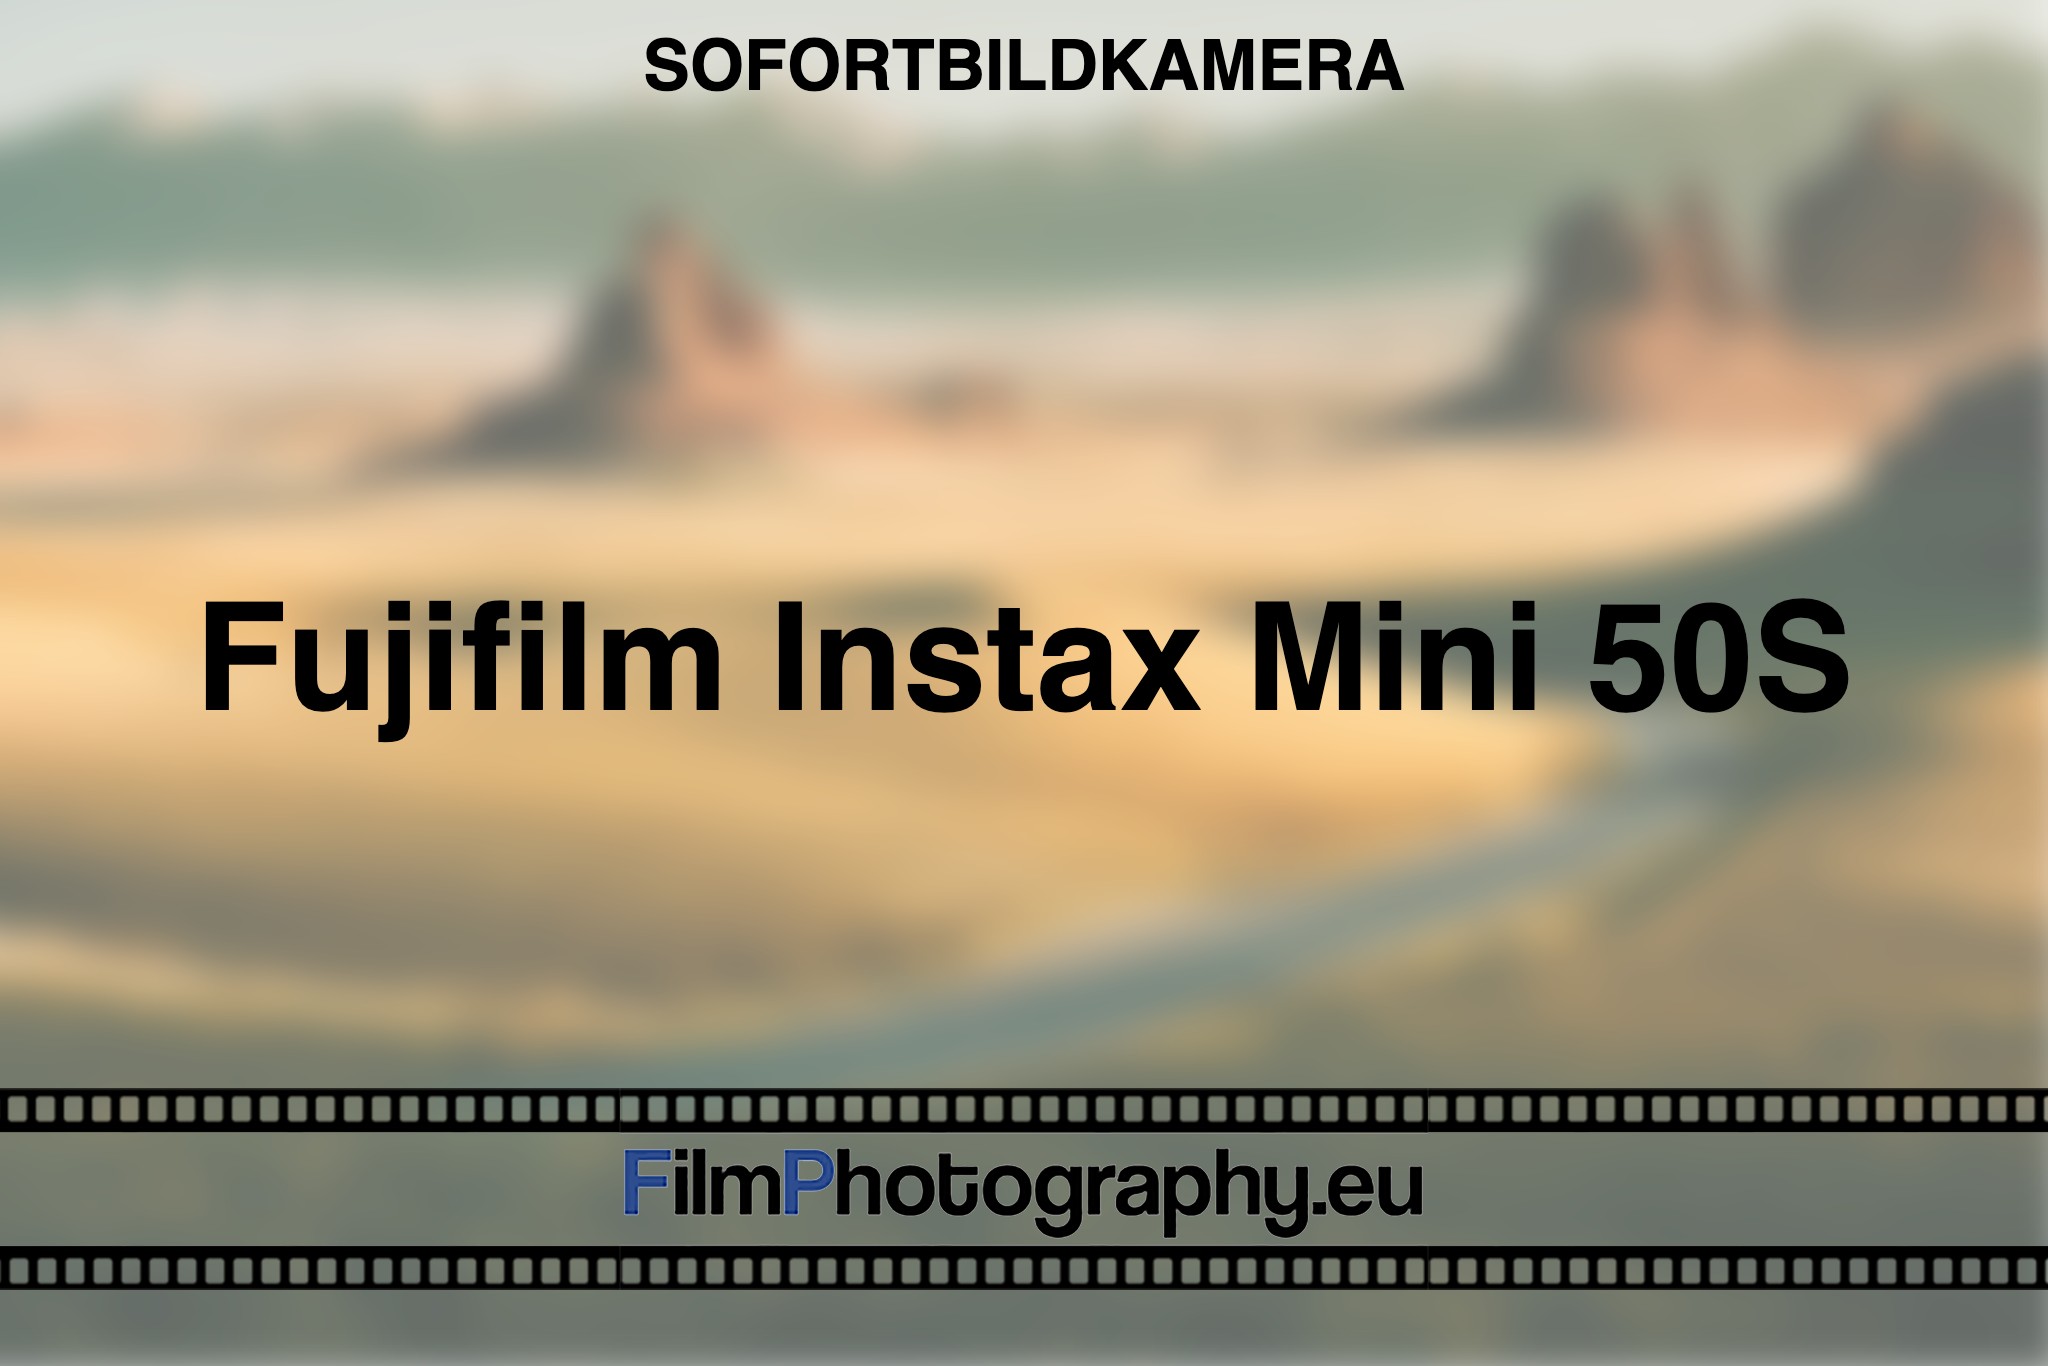 fujifilm-instax-mini-50s-sofortbildkamera-bnv